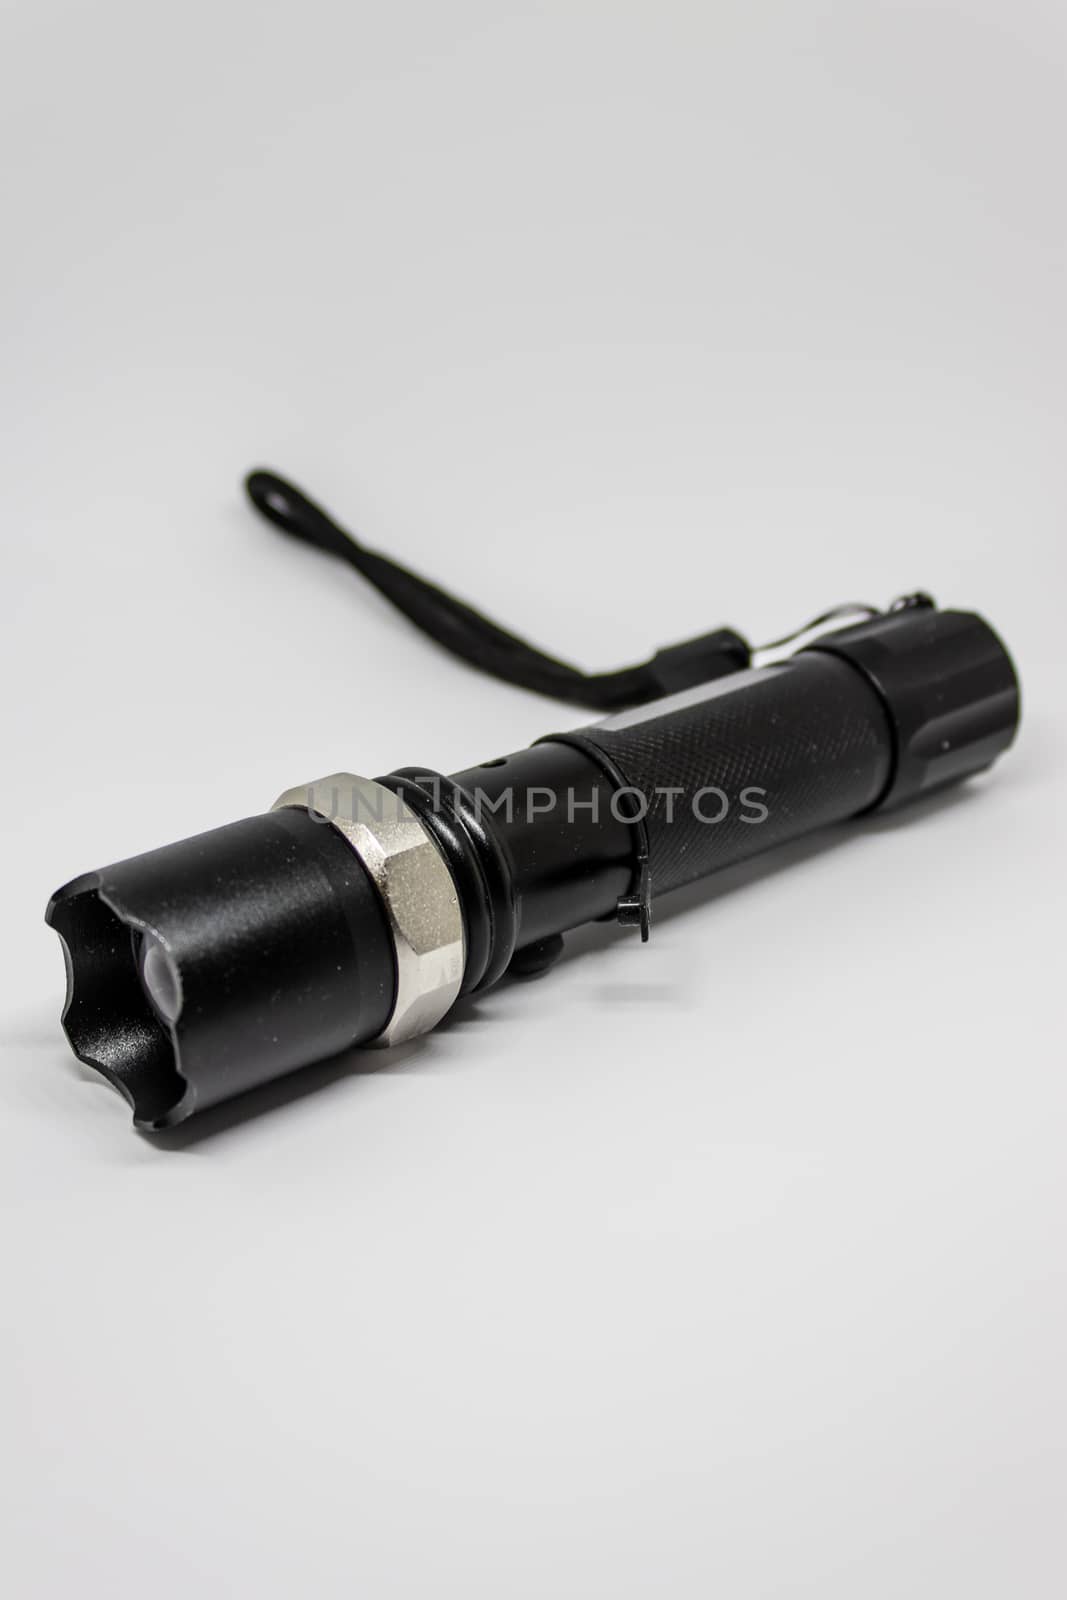 a closeup flashlight shoot with white background. shoot has taken with photobox.